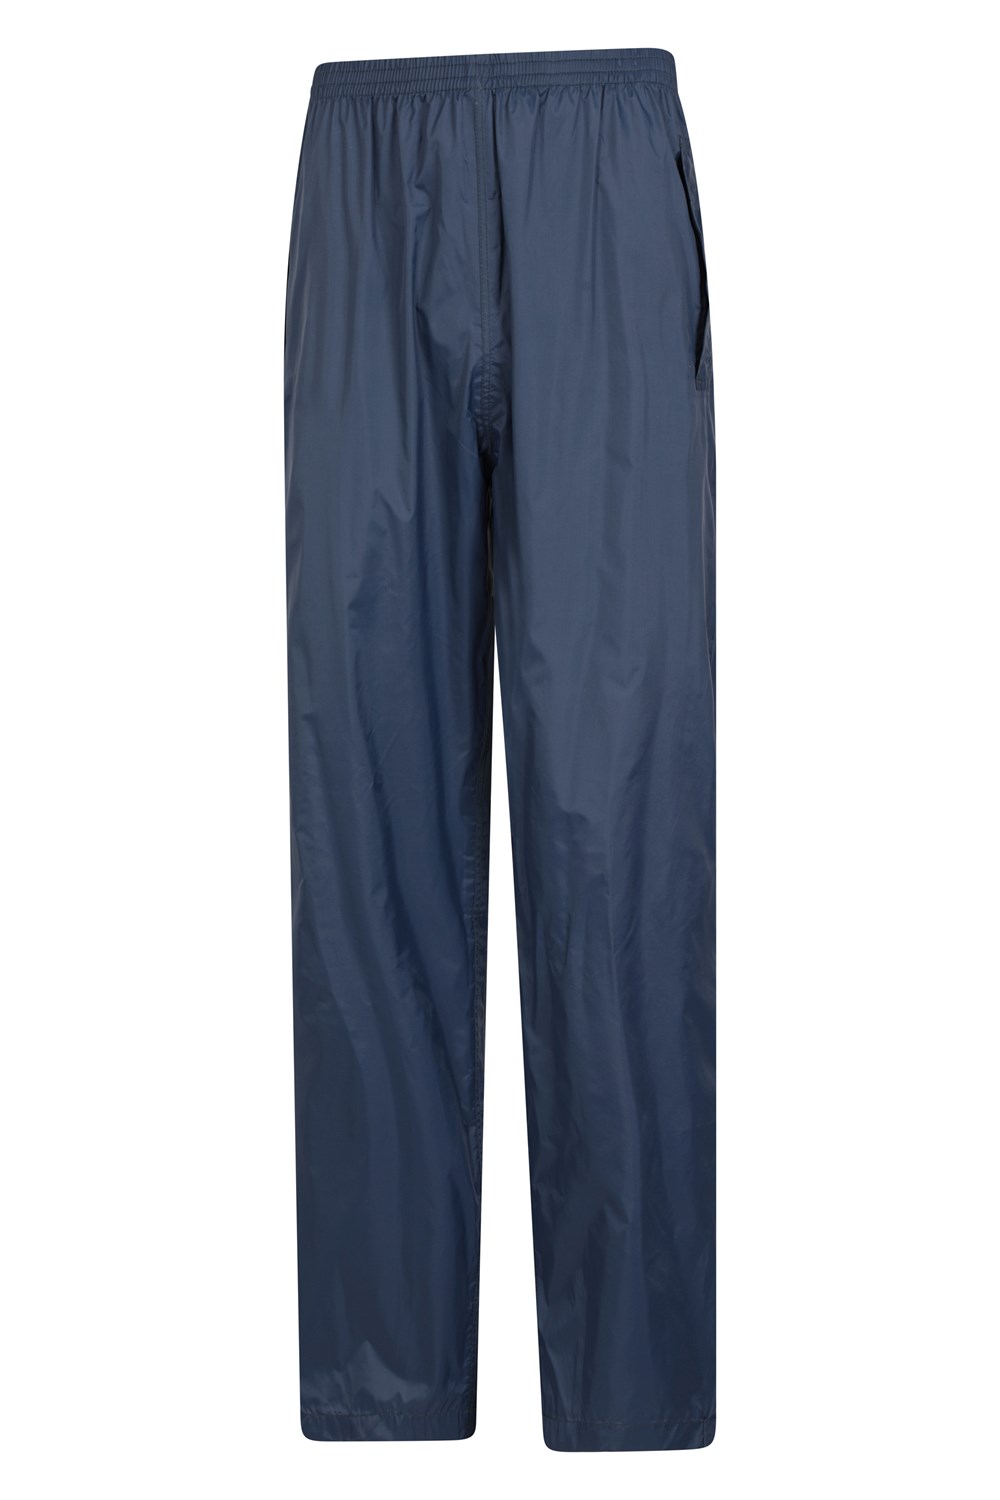 Mountain Warehouse Mens Waterproof Over Trousers Walking Rain Pants ...